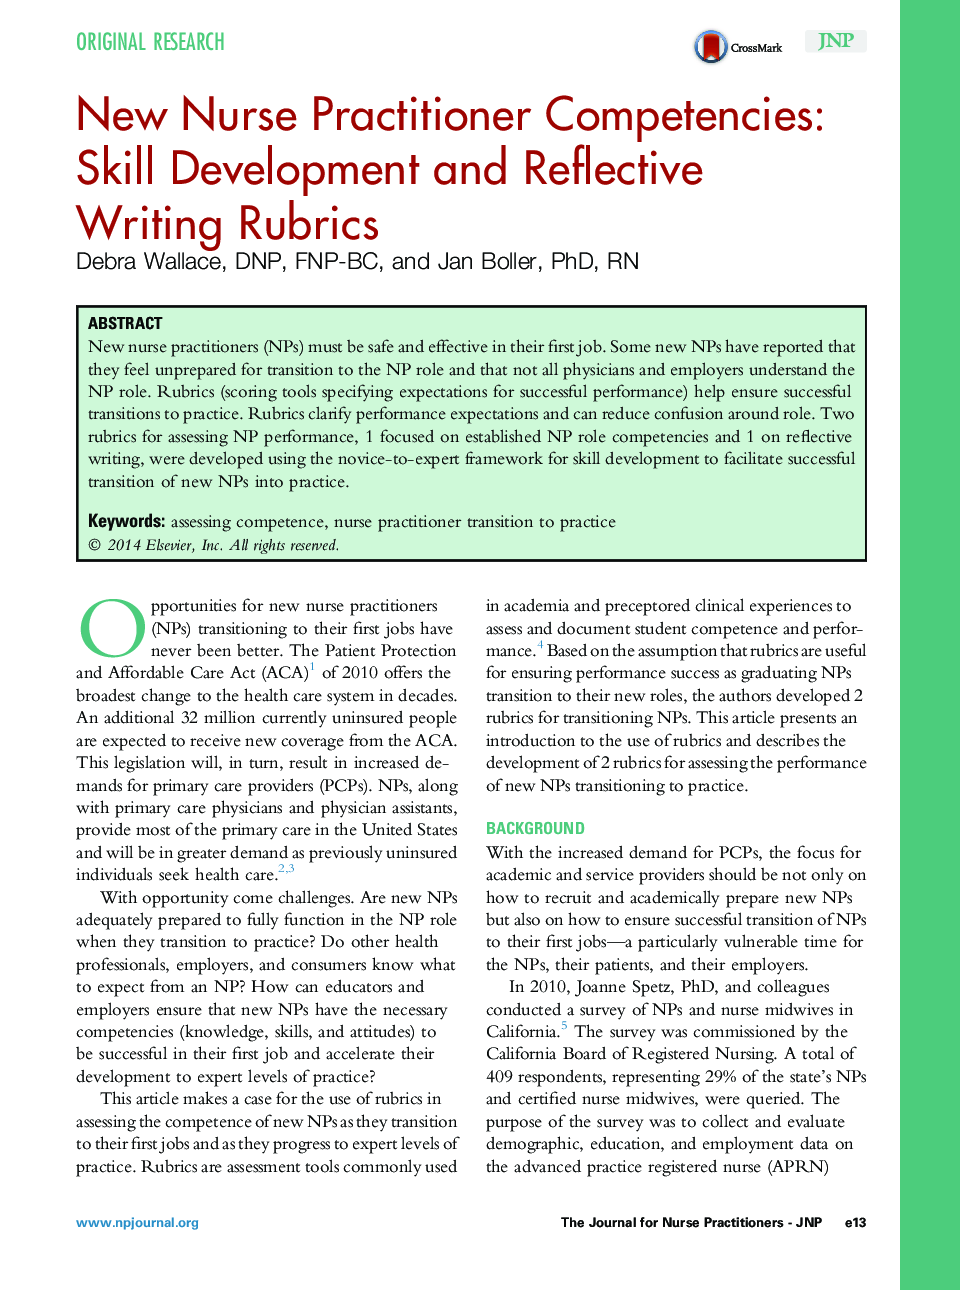 New Nurse Practitioner Competencies: Skill Development and Reflective Writing Rubrics 